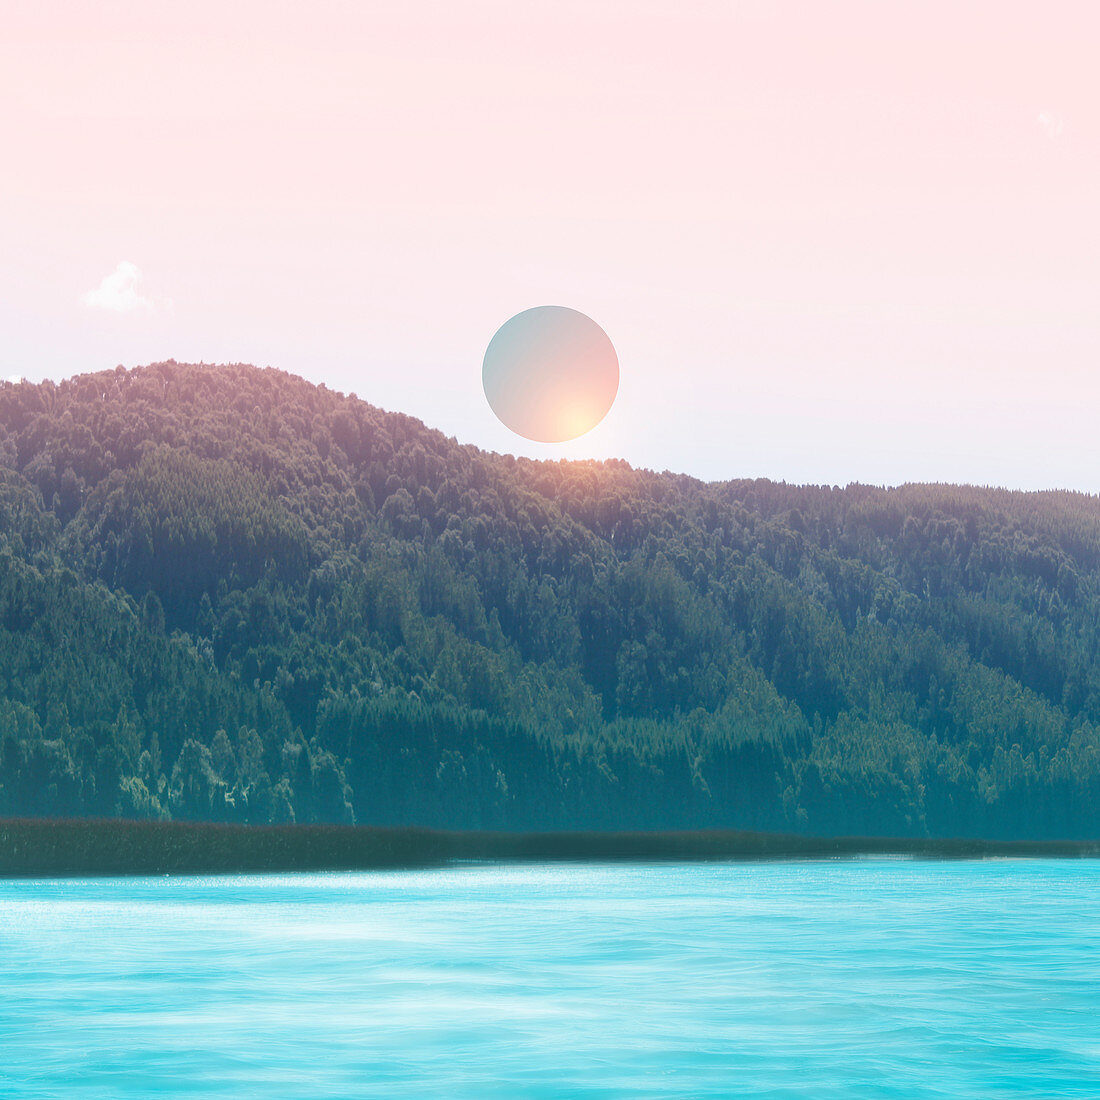 Pink sun above turquoise lake, illustration